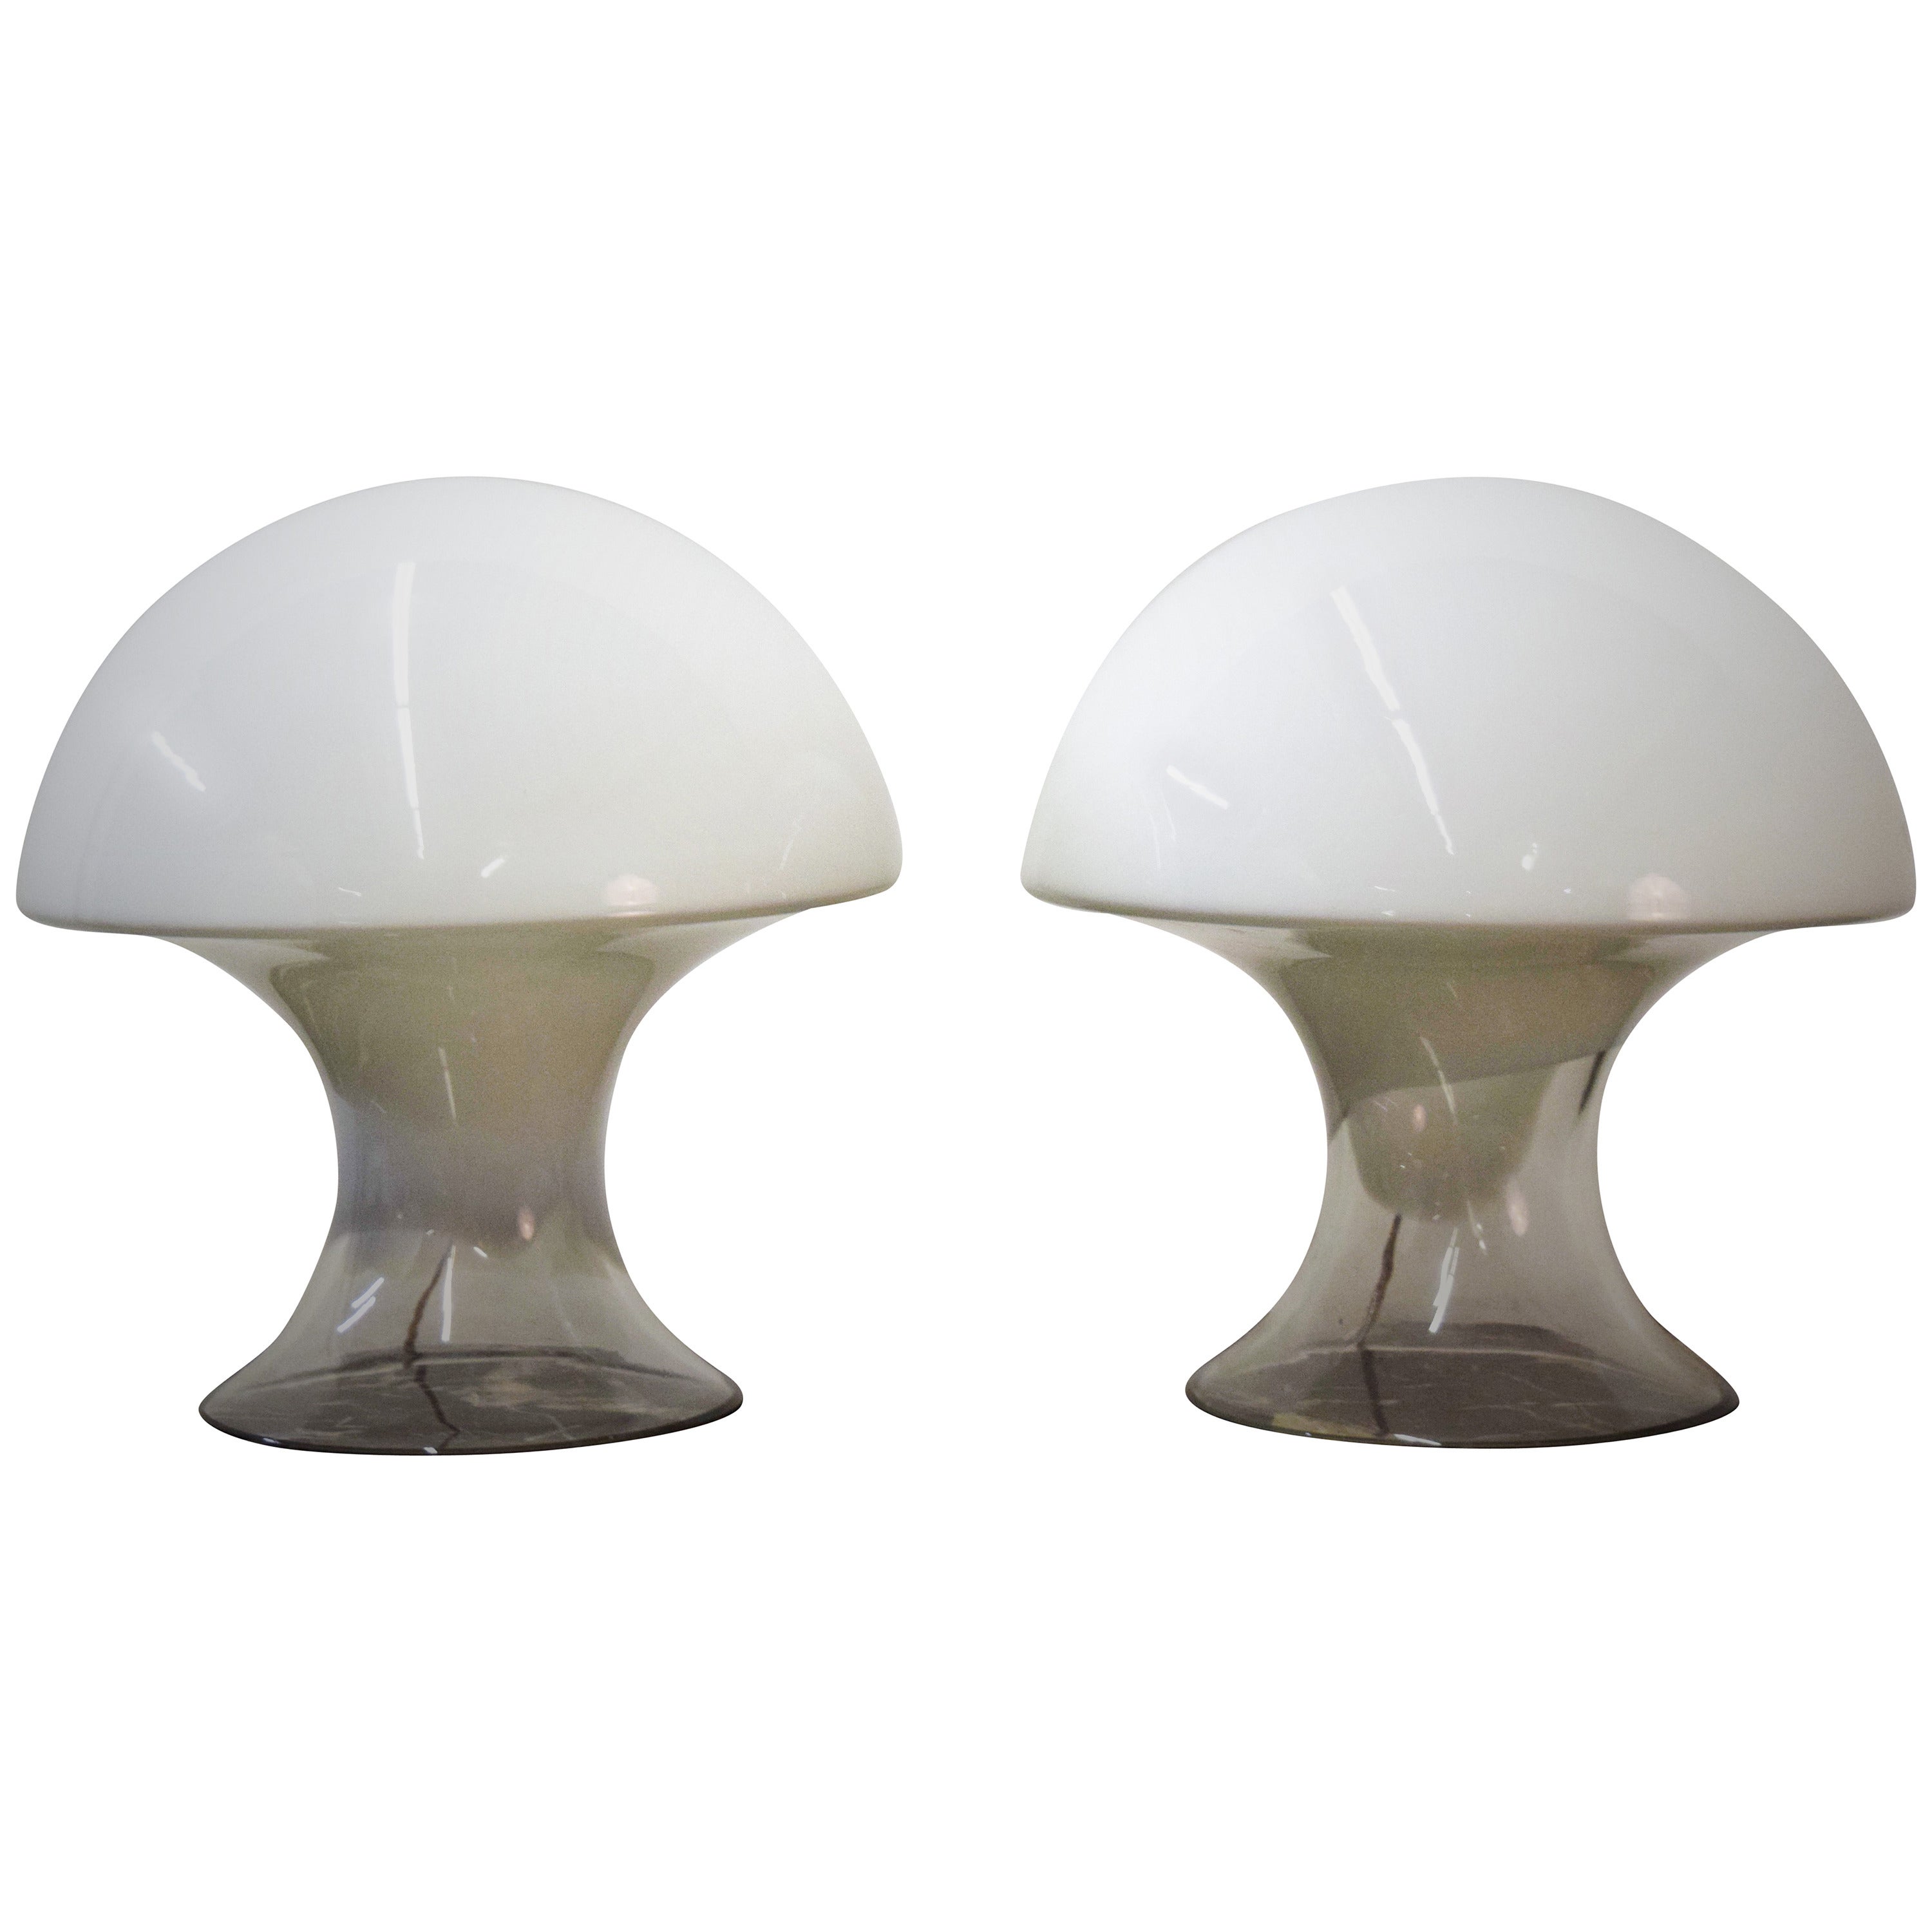 Pair of Vistosi Murano Glass Mushroom Table Lamps